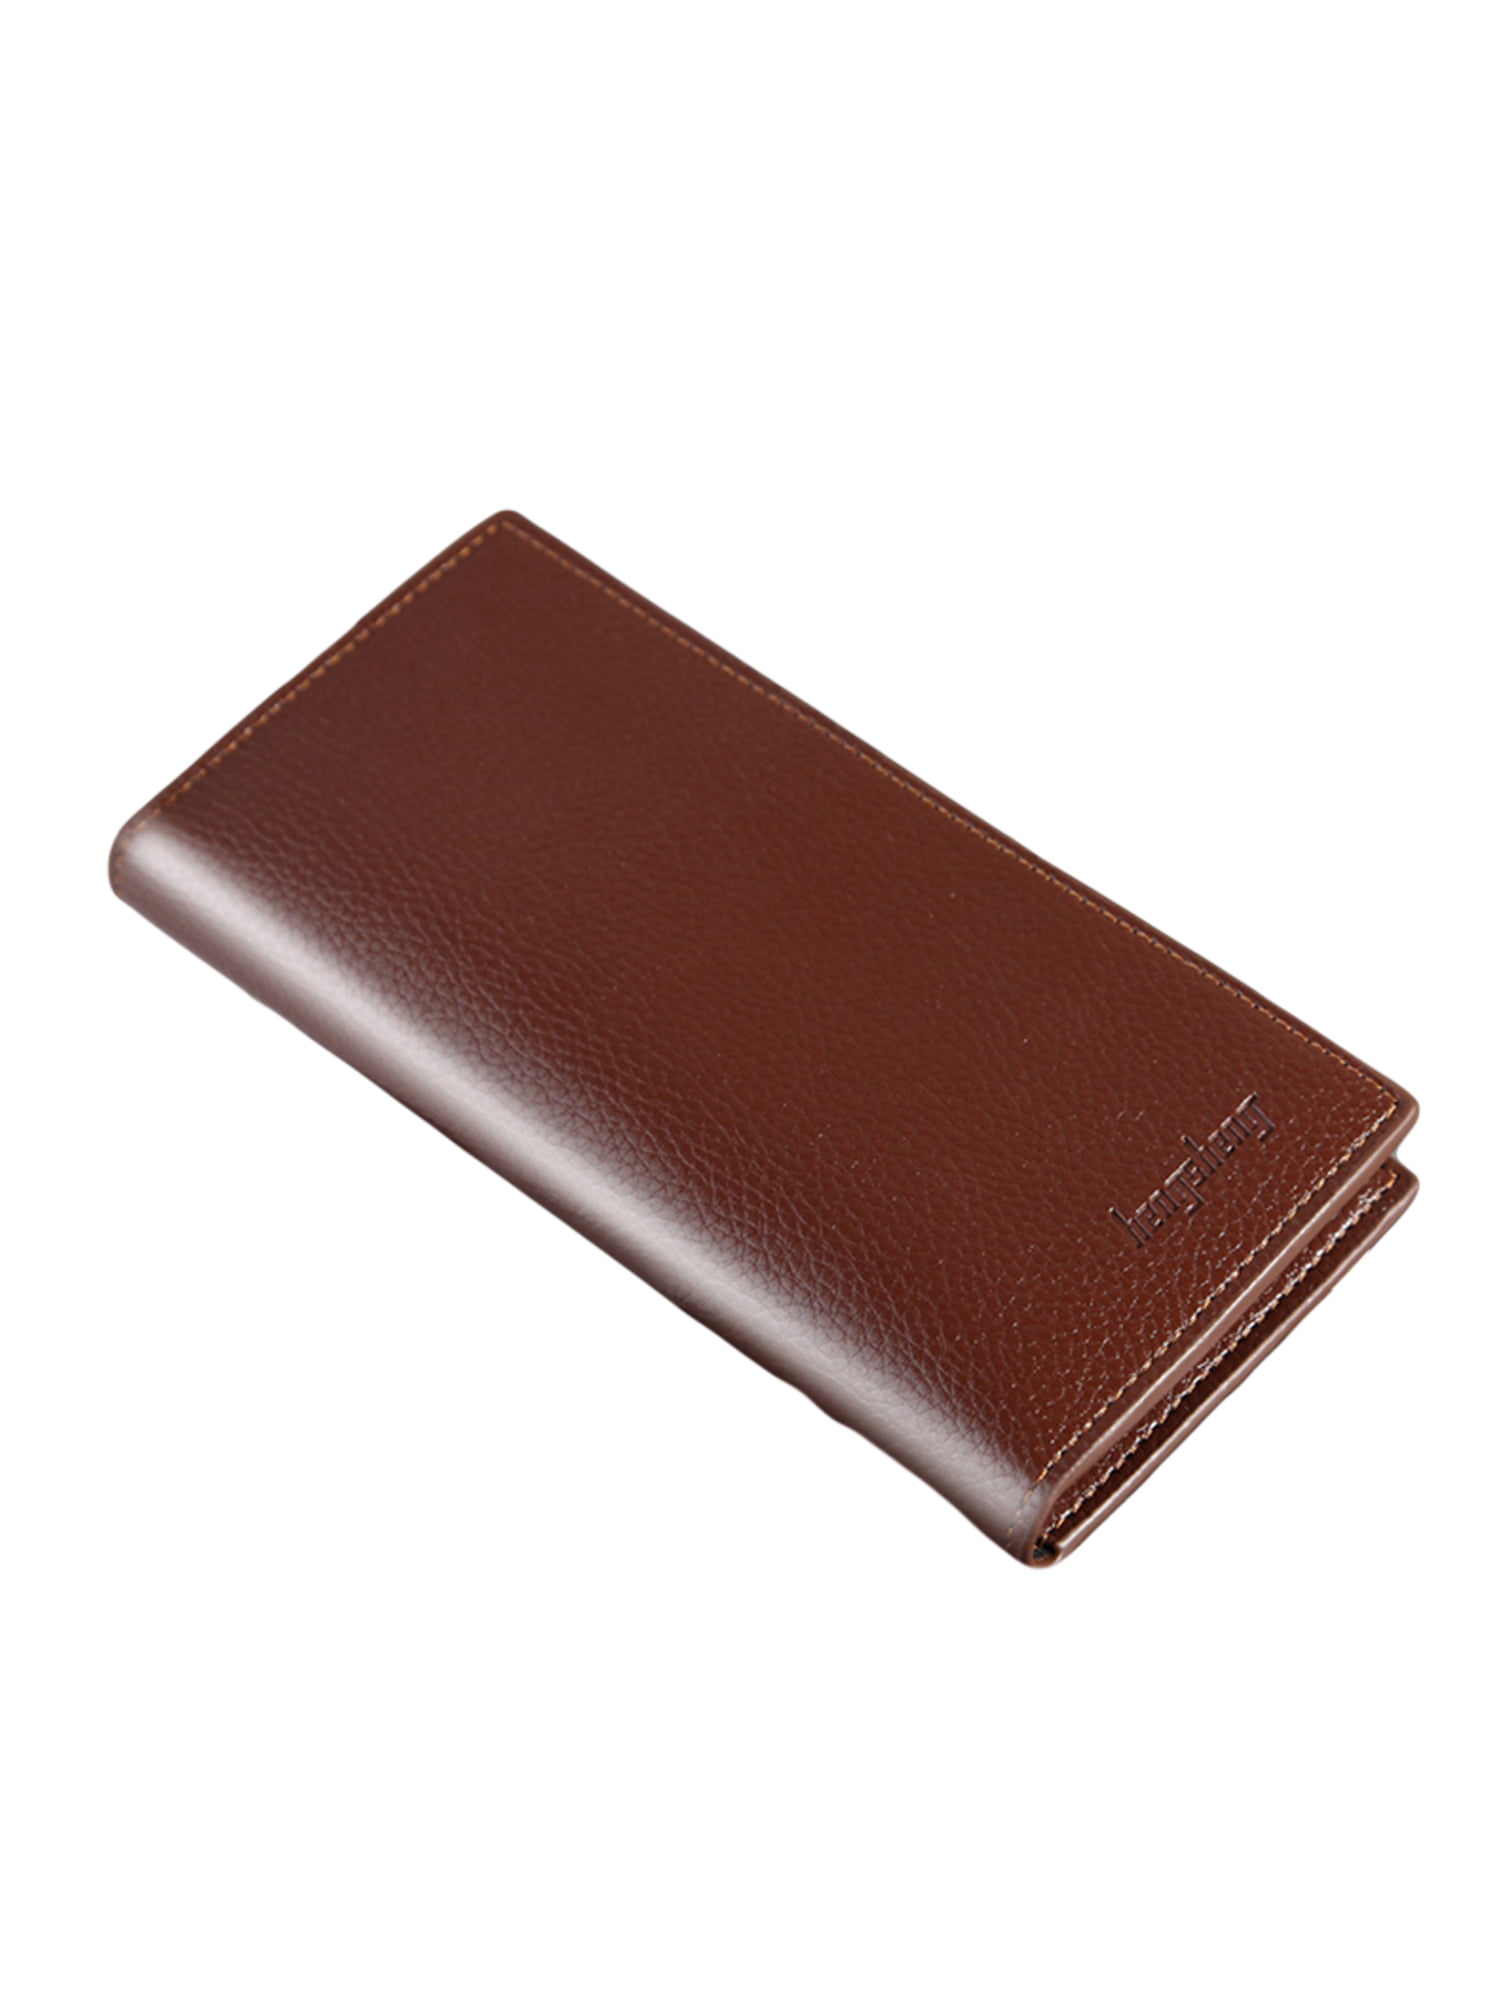 Men's Genuine Leather Credit Card Holder Wallet Bifold ID Cash Coin Purse Clutch